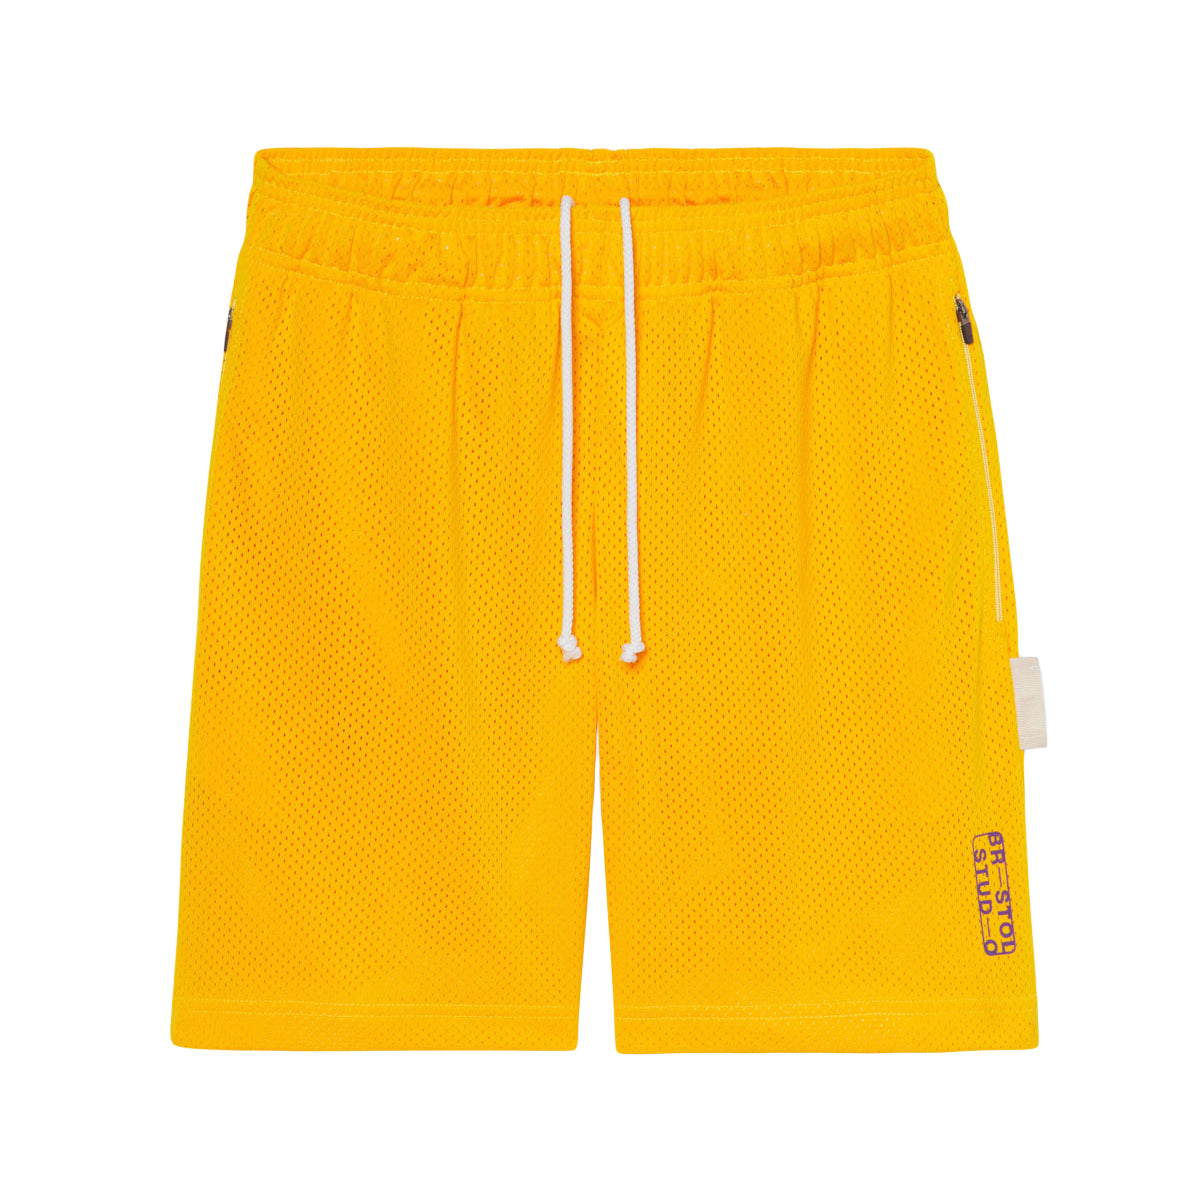 Bristol Studio Men Core Shorts Yellow - SHORTS - Canada